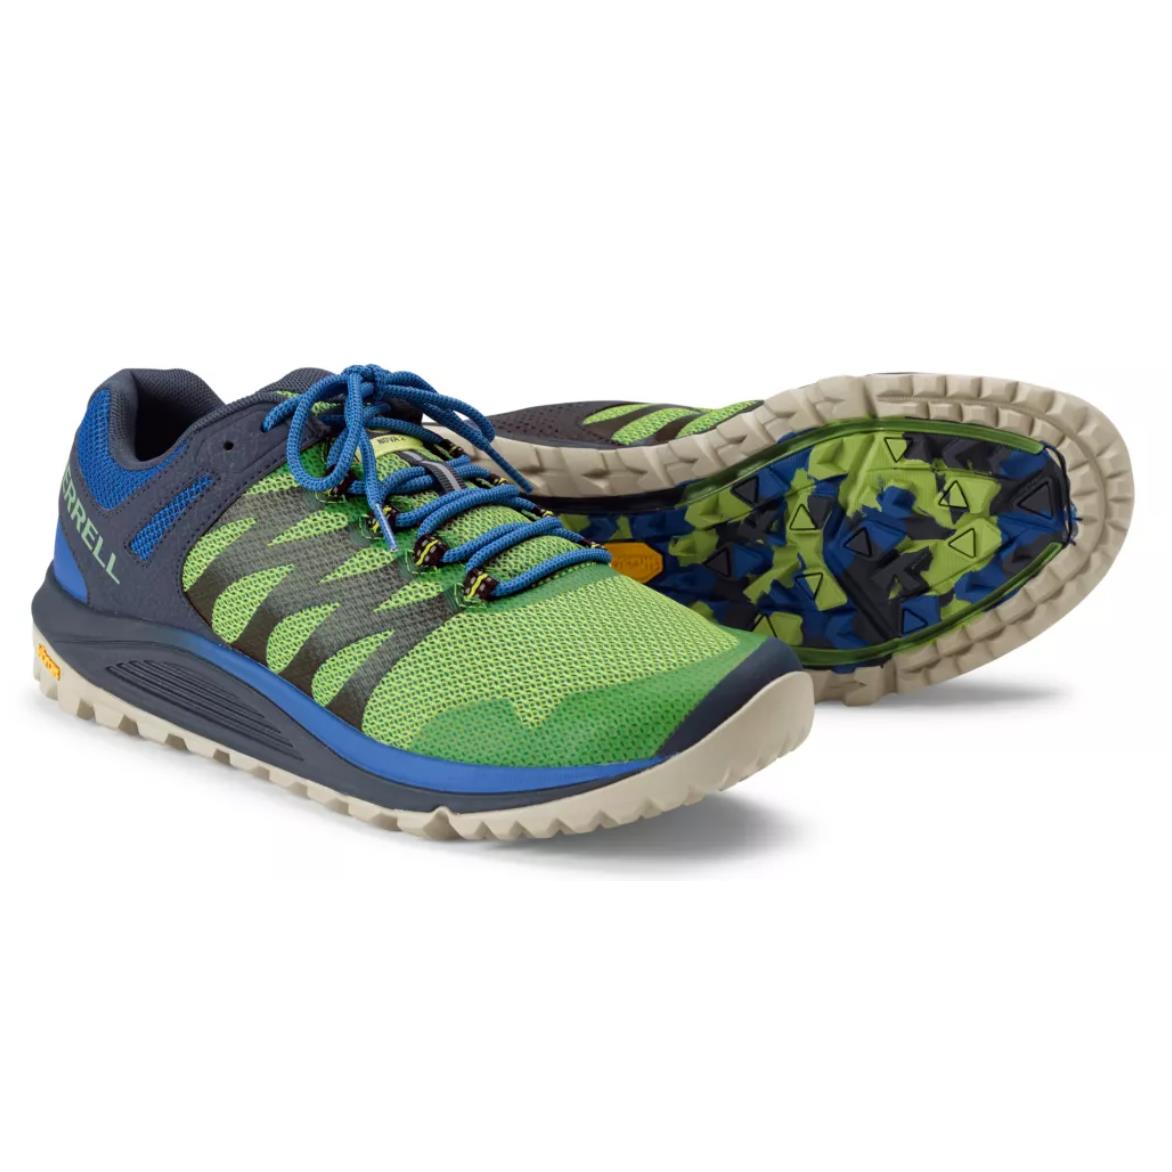 Merrell Nova 2 Foliage Sneaker Hiker Shoe Men`s US Sizes 7-15